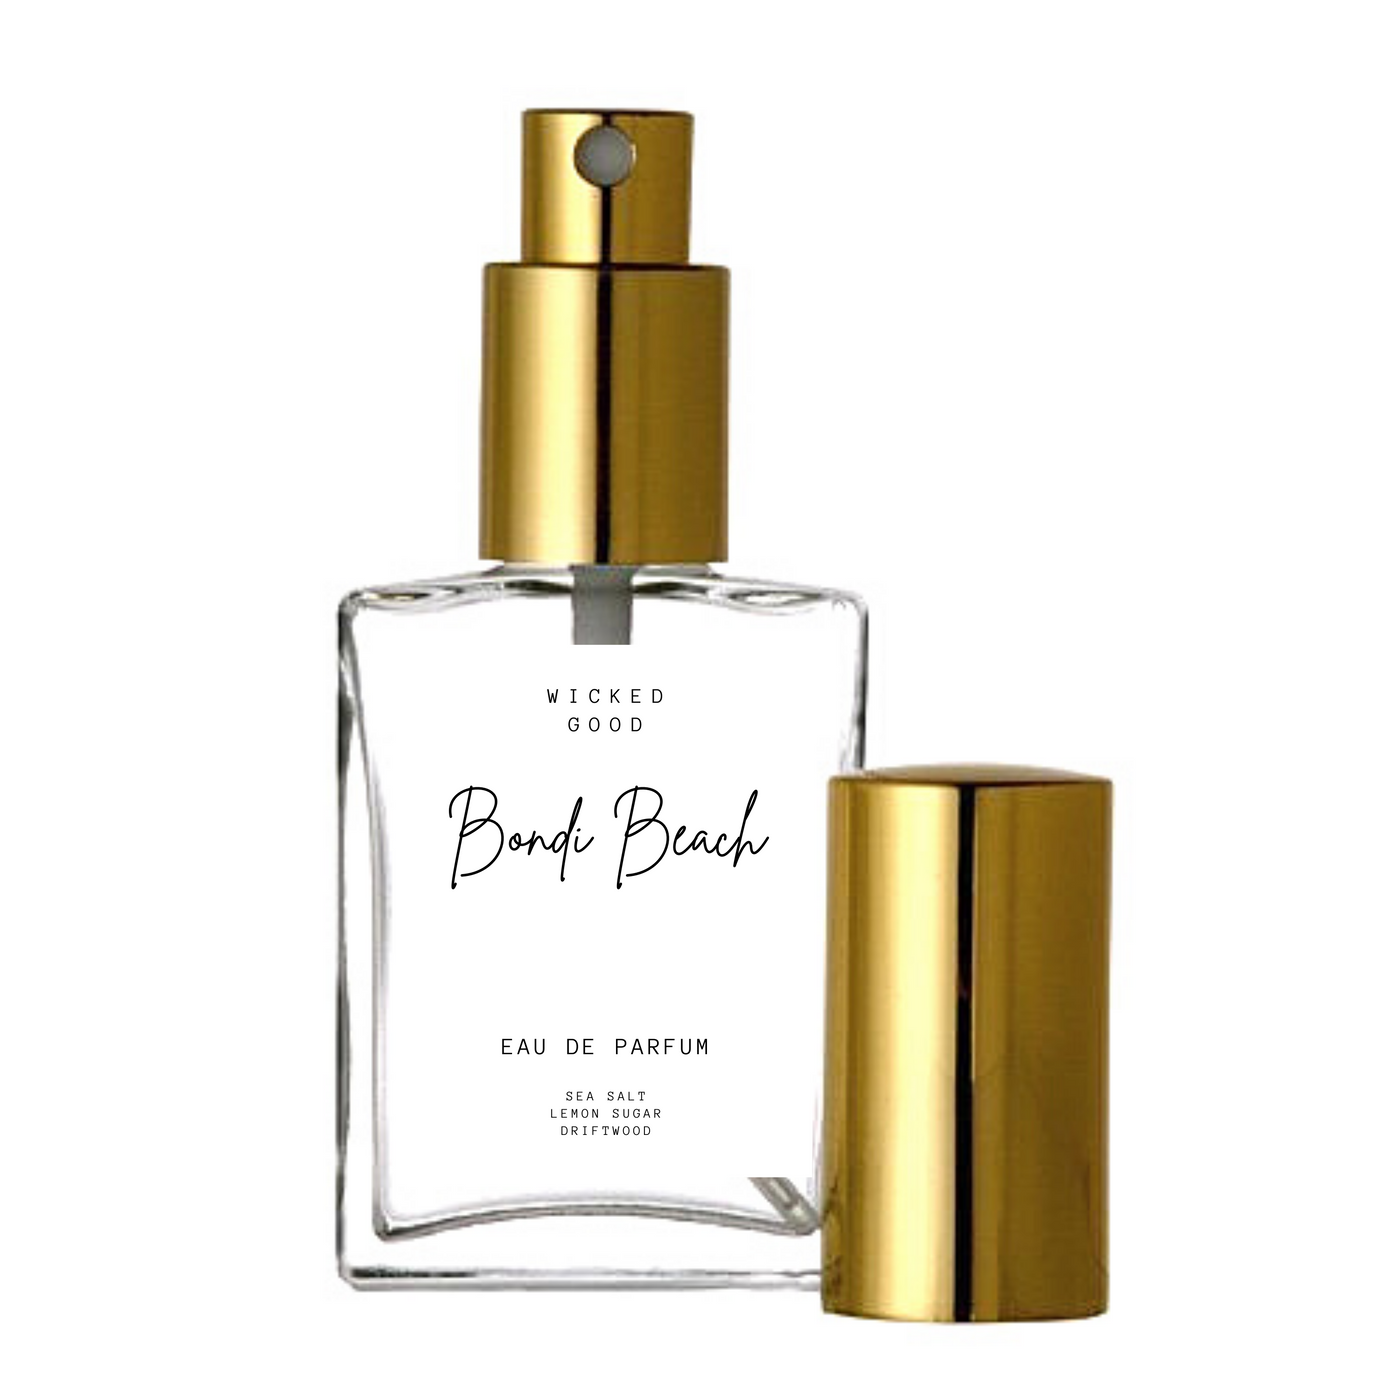 Bondi Beach Perfume Perfume Spray | Wicked Good Clean Fragrances